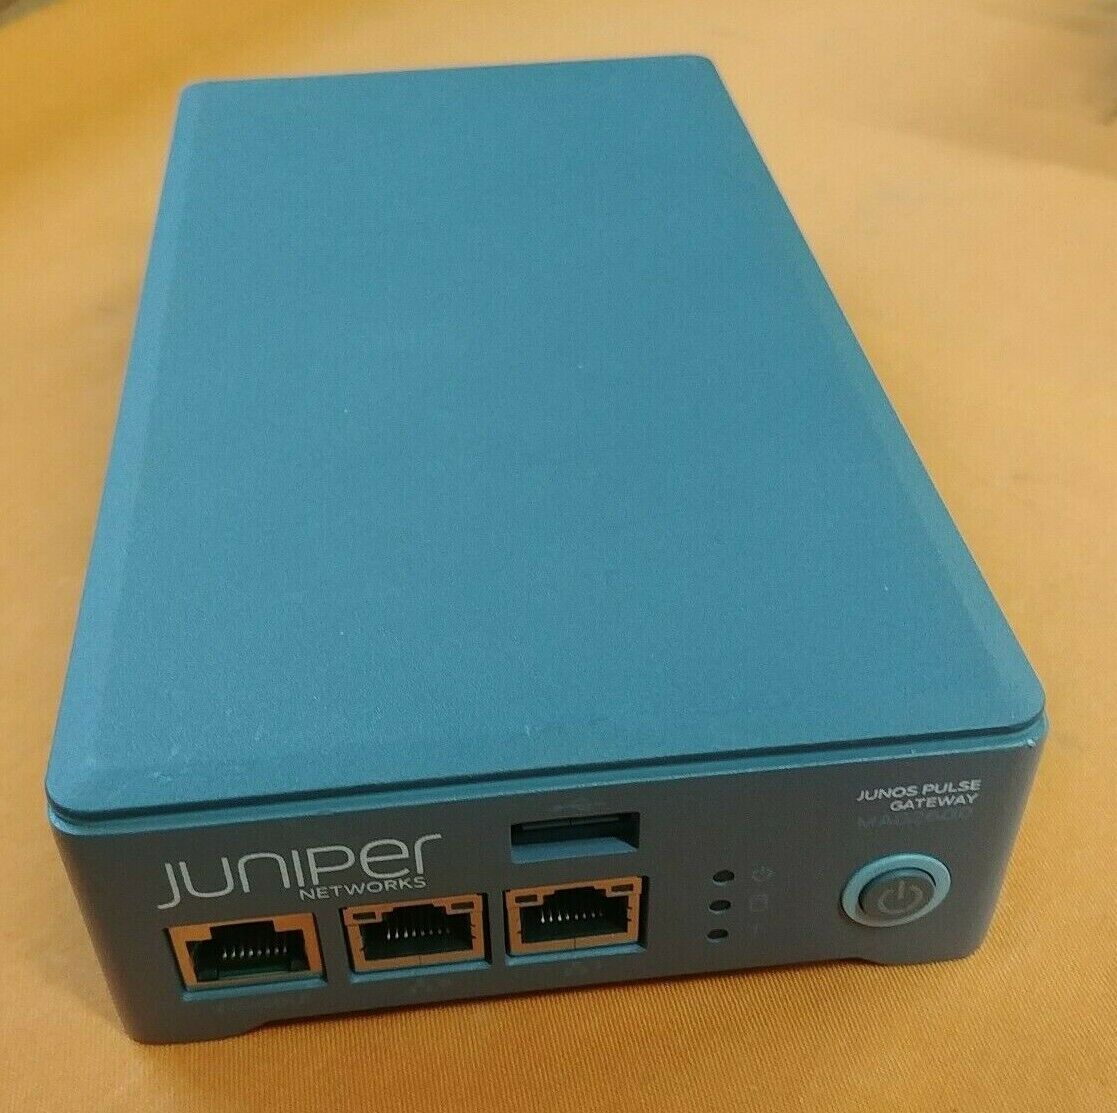 Juniper Pulse Gateway MAG2600 VPN Appliance for Enterprise Guest WiFi Network